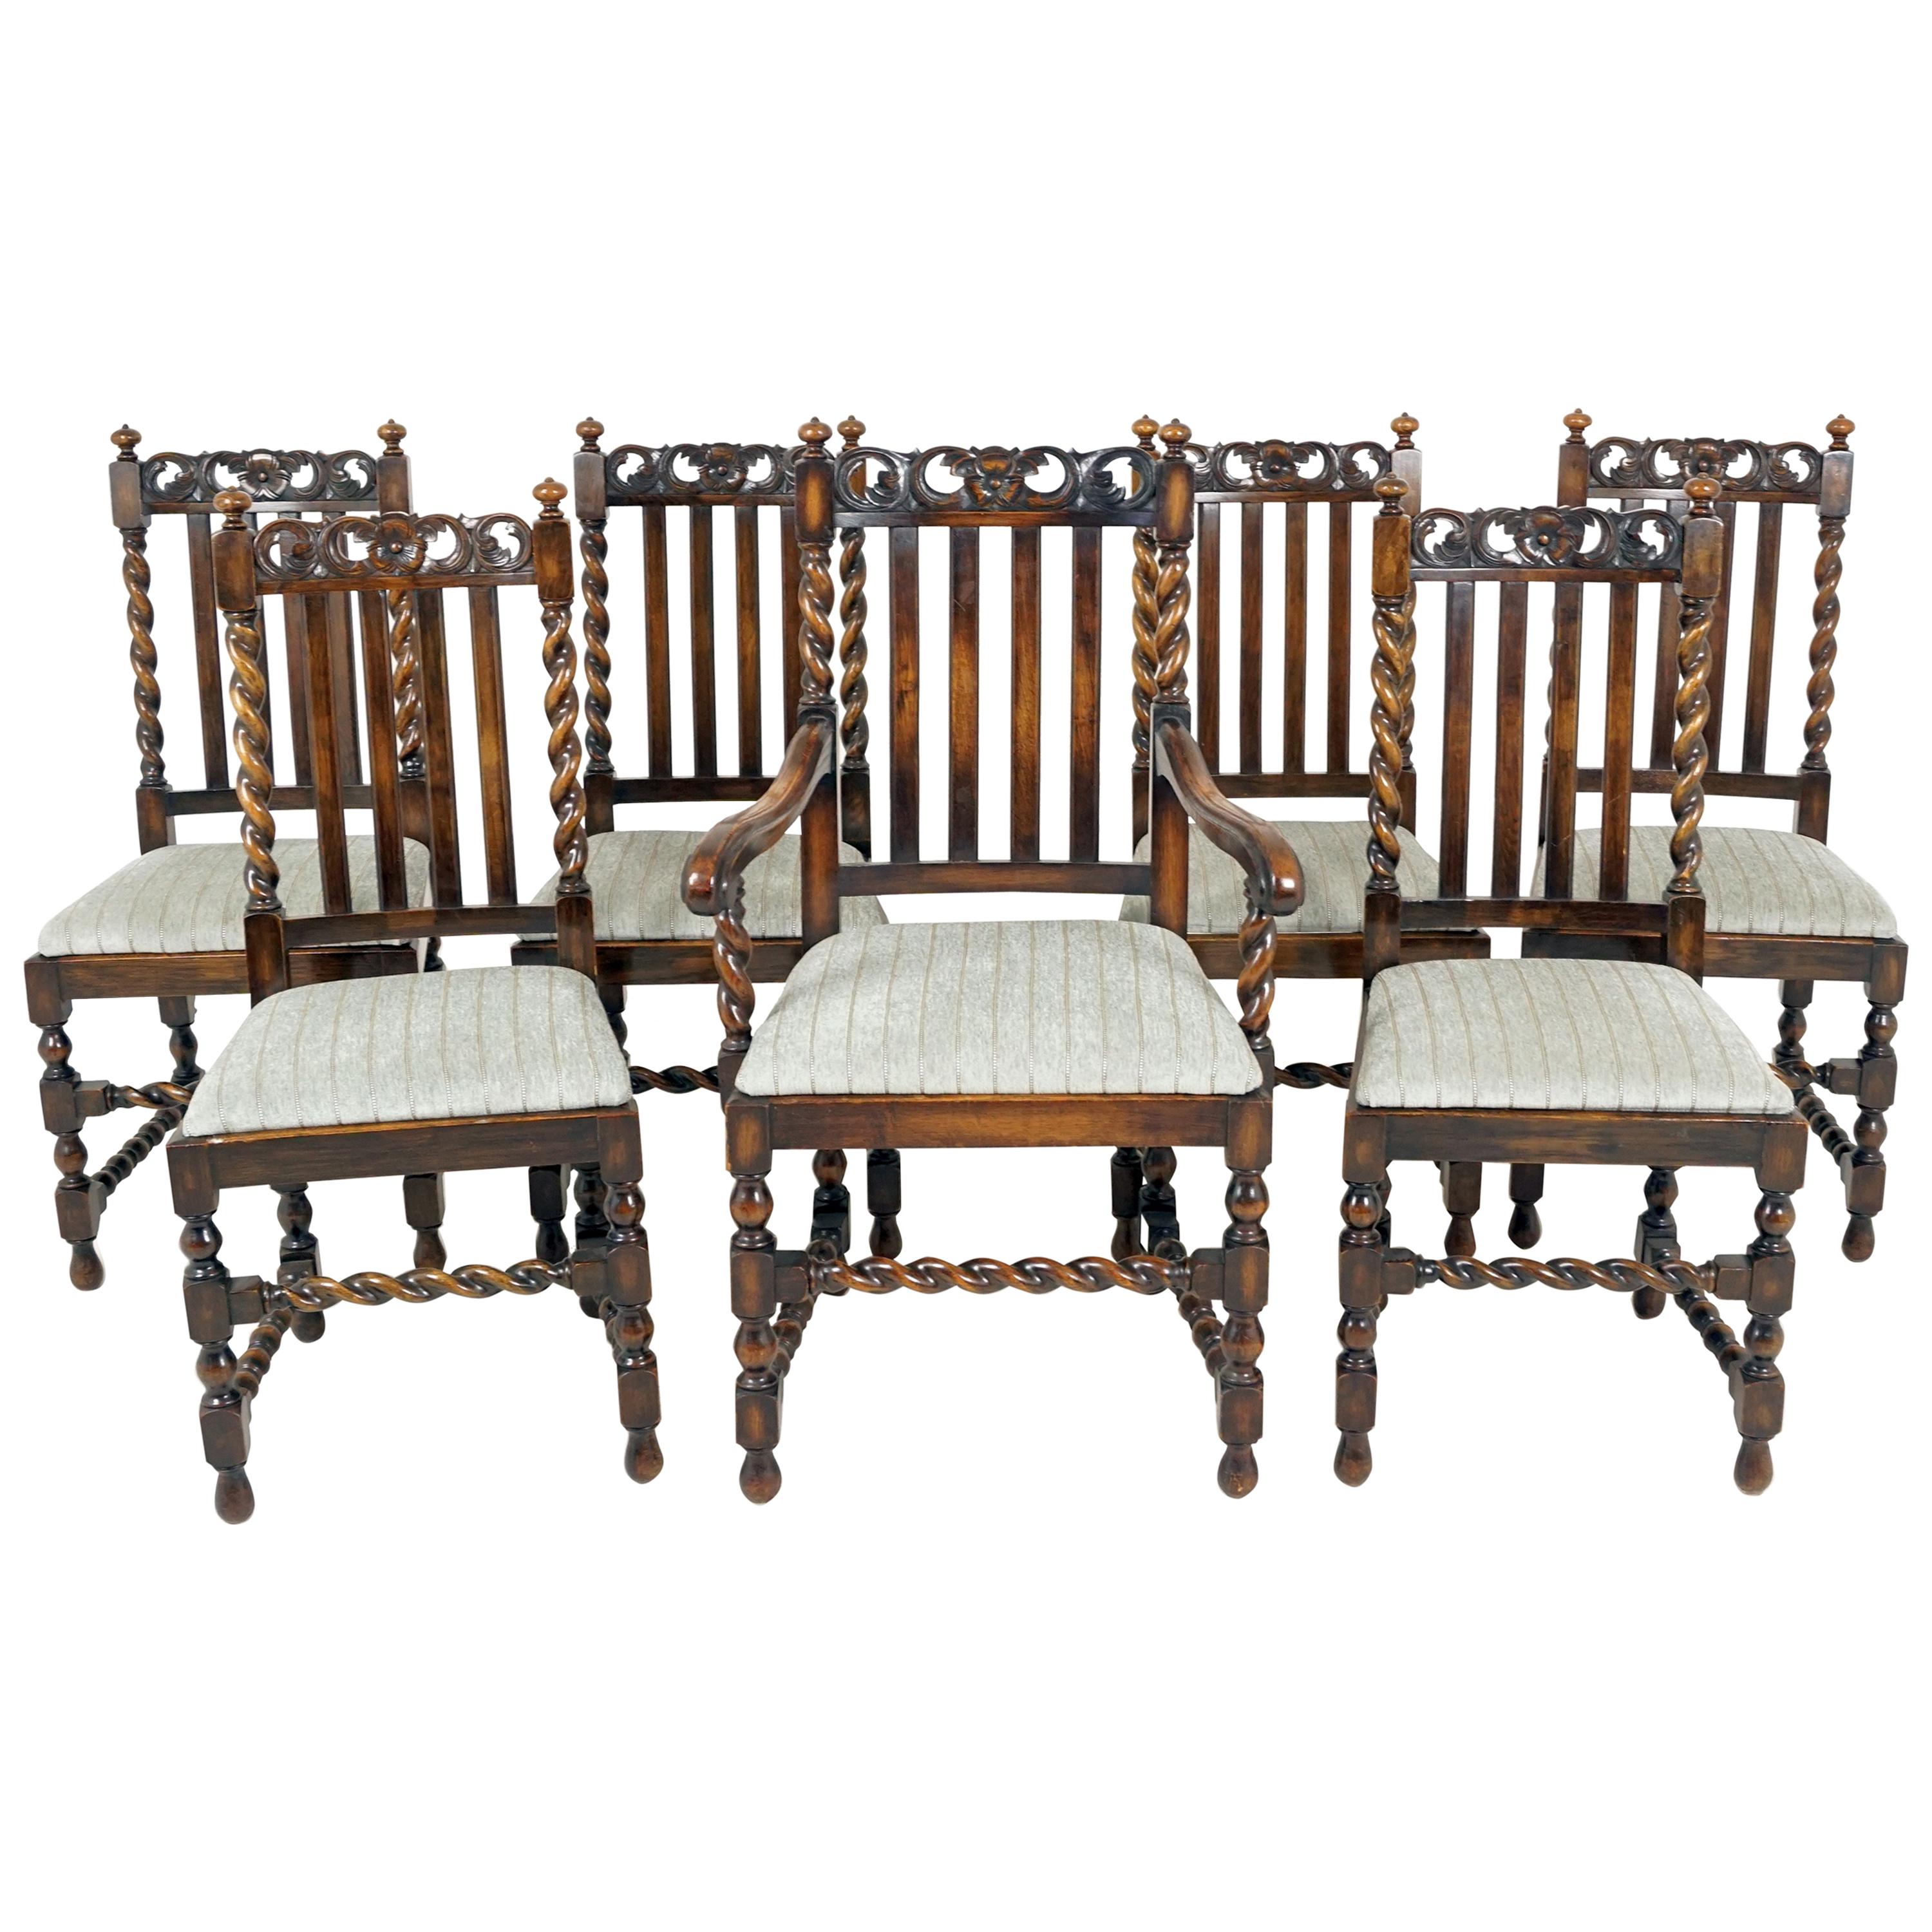 7 Antique Oak Barley Twist Dining Chairs, Lift Out Seats, Scotland 1920, B2499